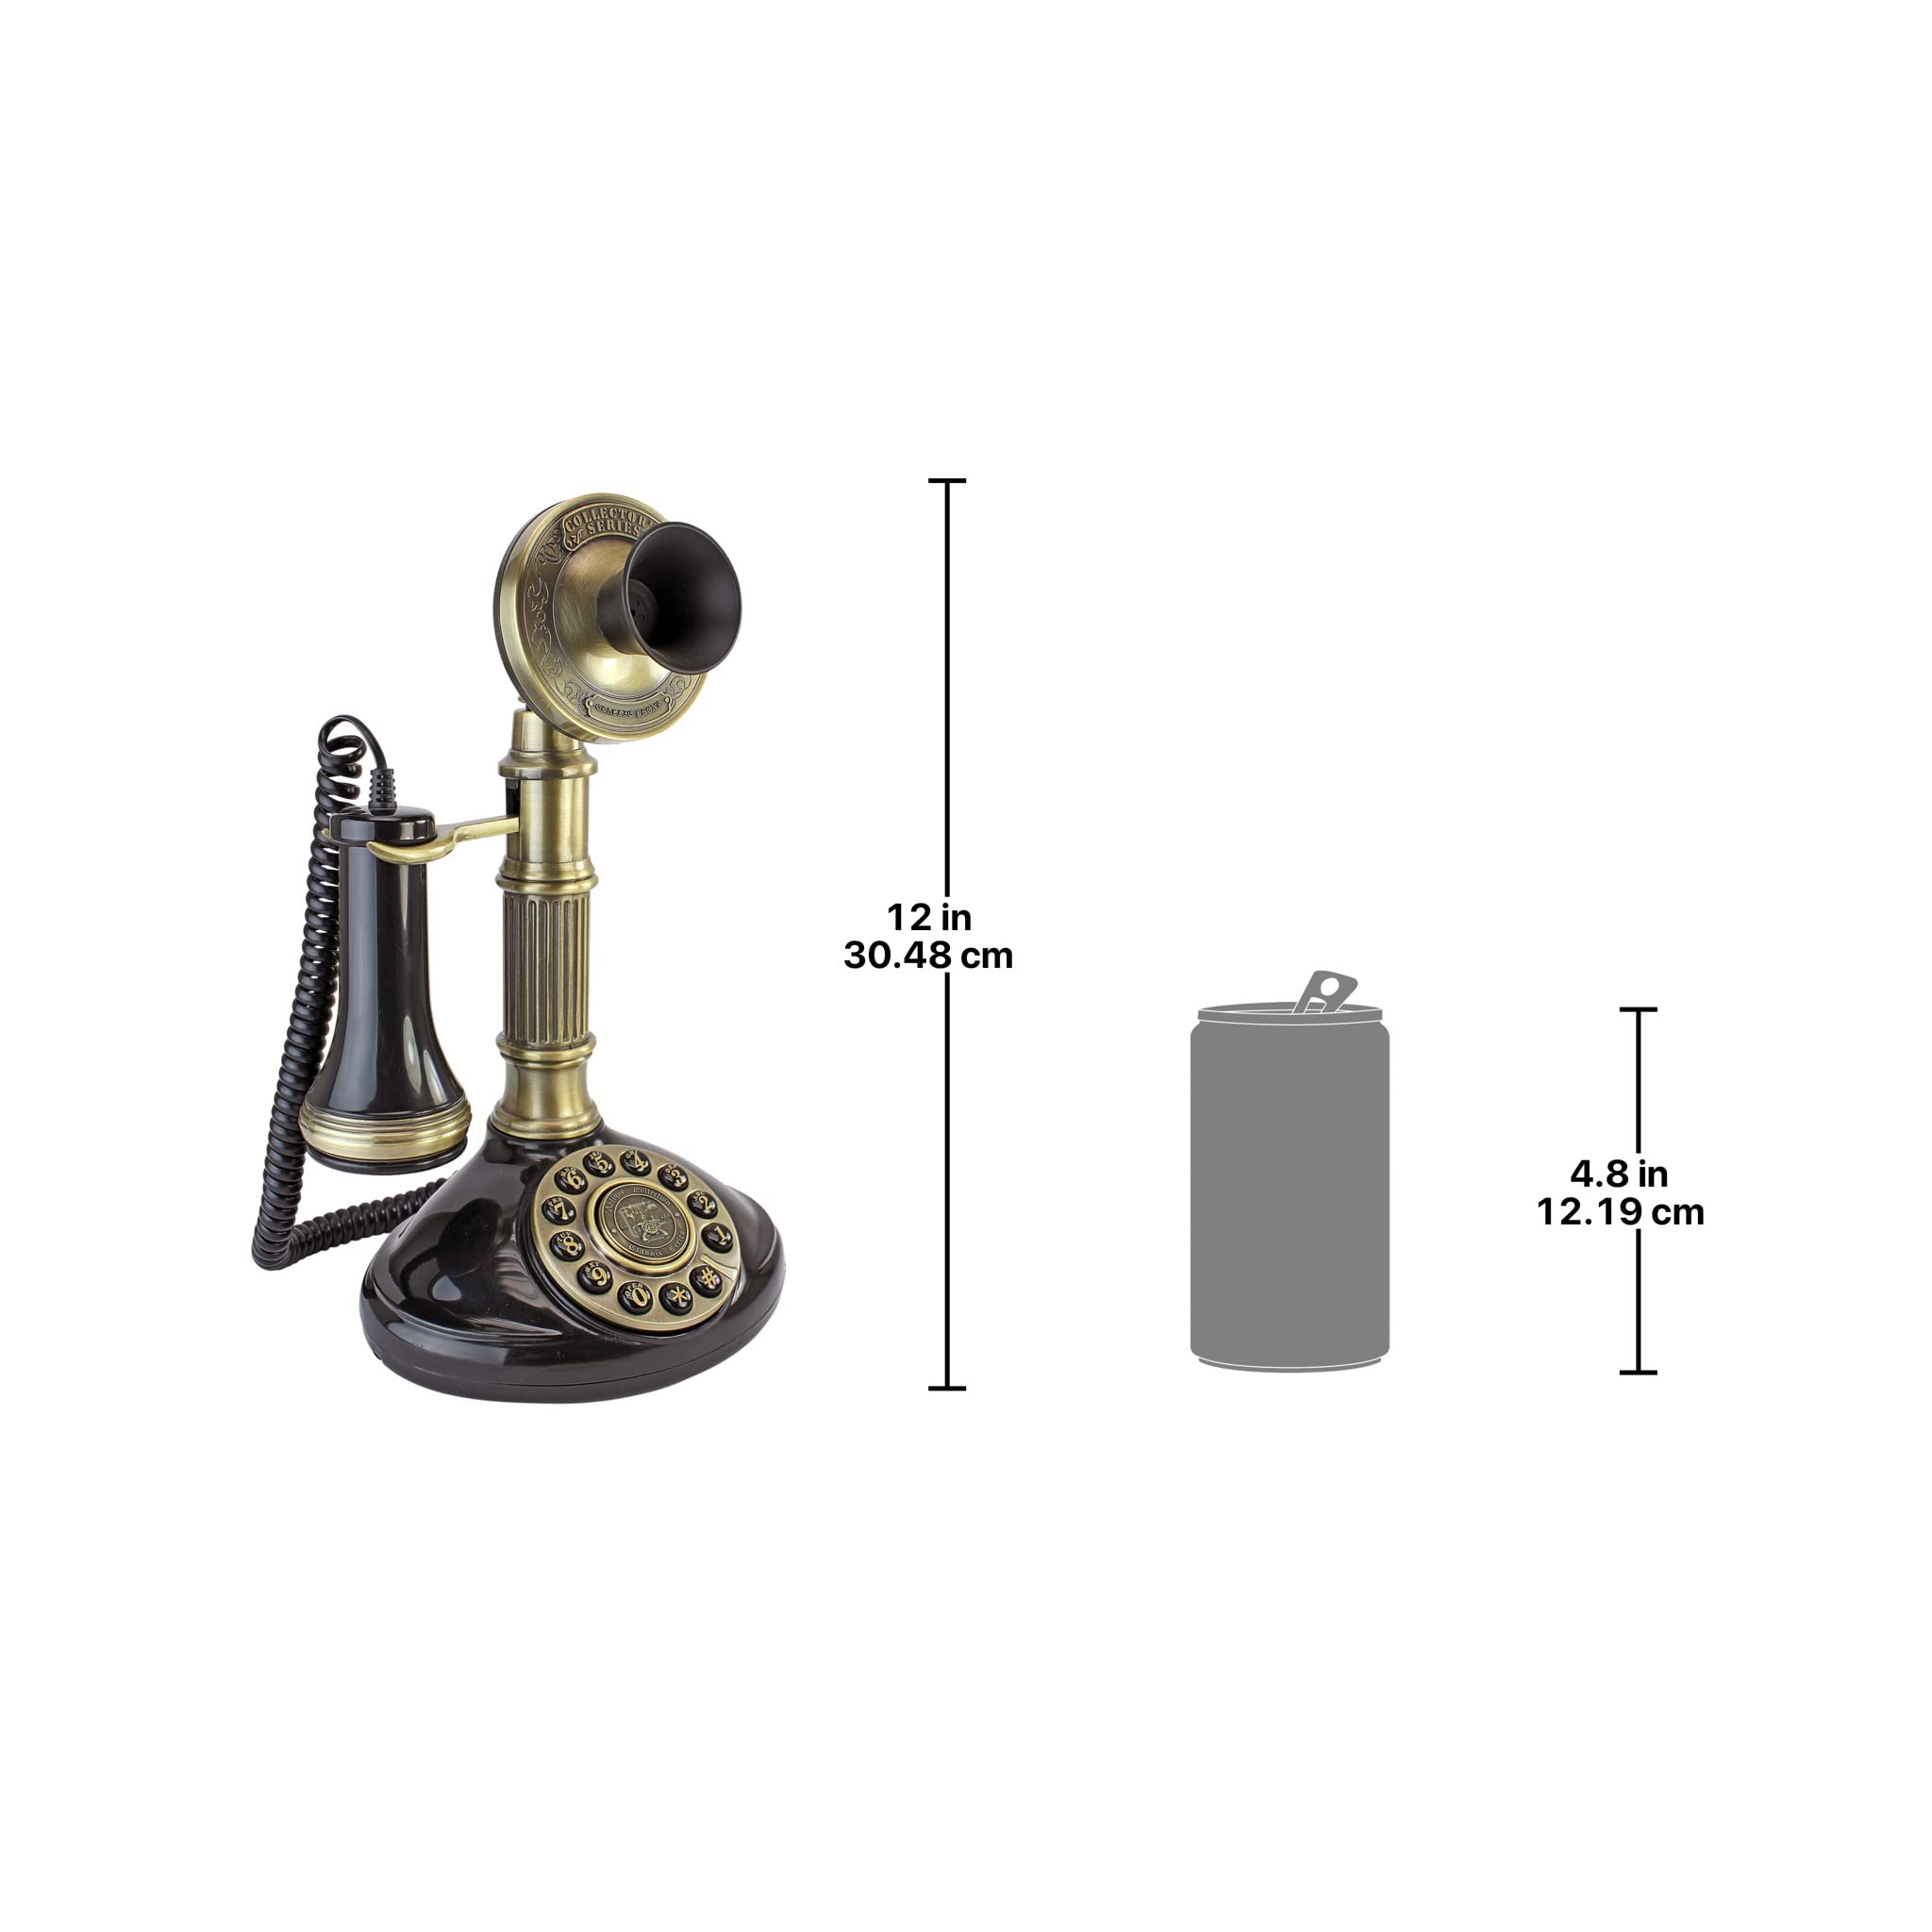 Design Toscano PM1897 Antique Phone - Roman Column 1897 Candlestick Rotary Telephone - Corded Retro Phone - Vintage Decorative Telephones,Black